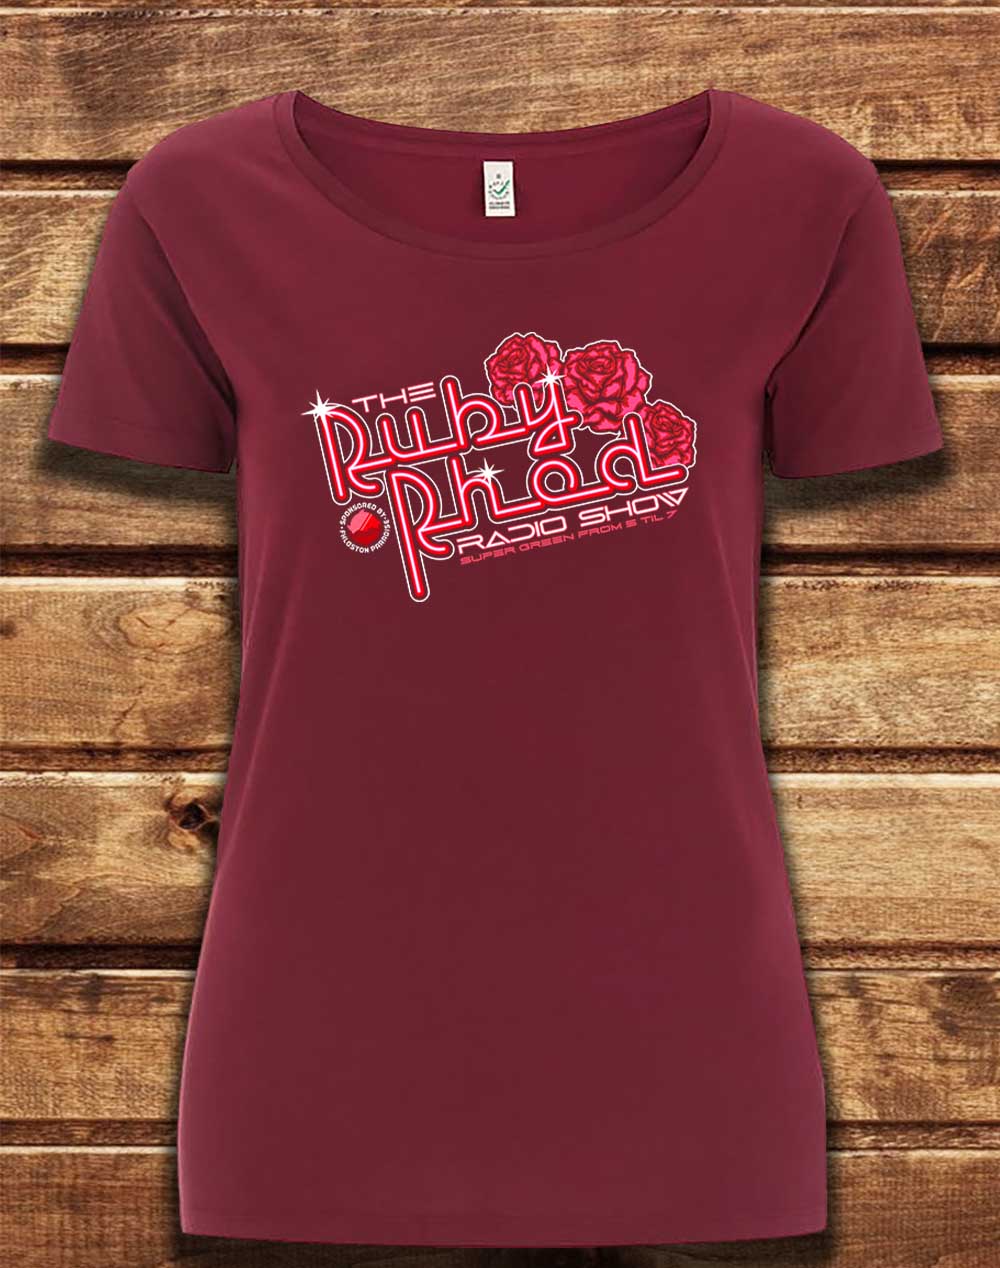 Burgundy - DELUXE Ruby Rhod Radio Show Organic Scoop Neck T-Shirt